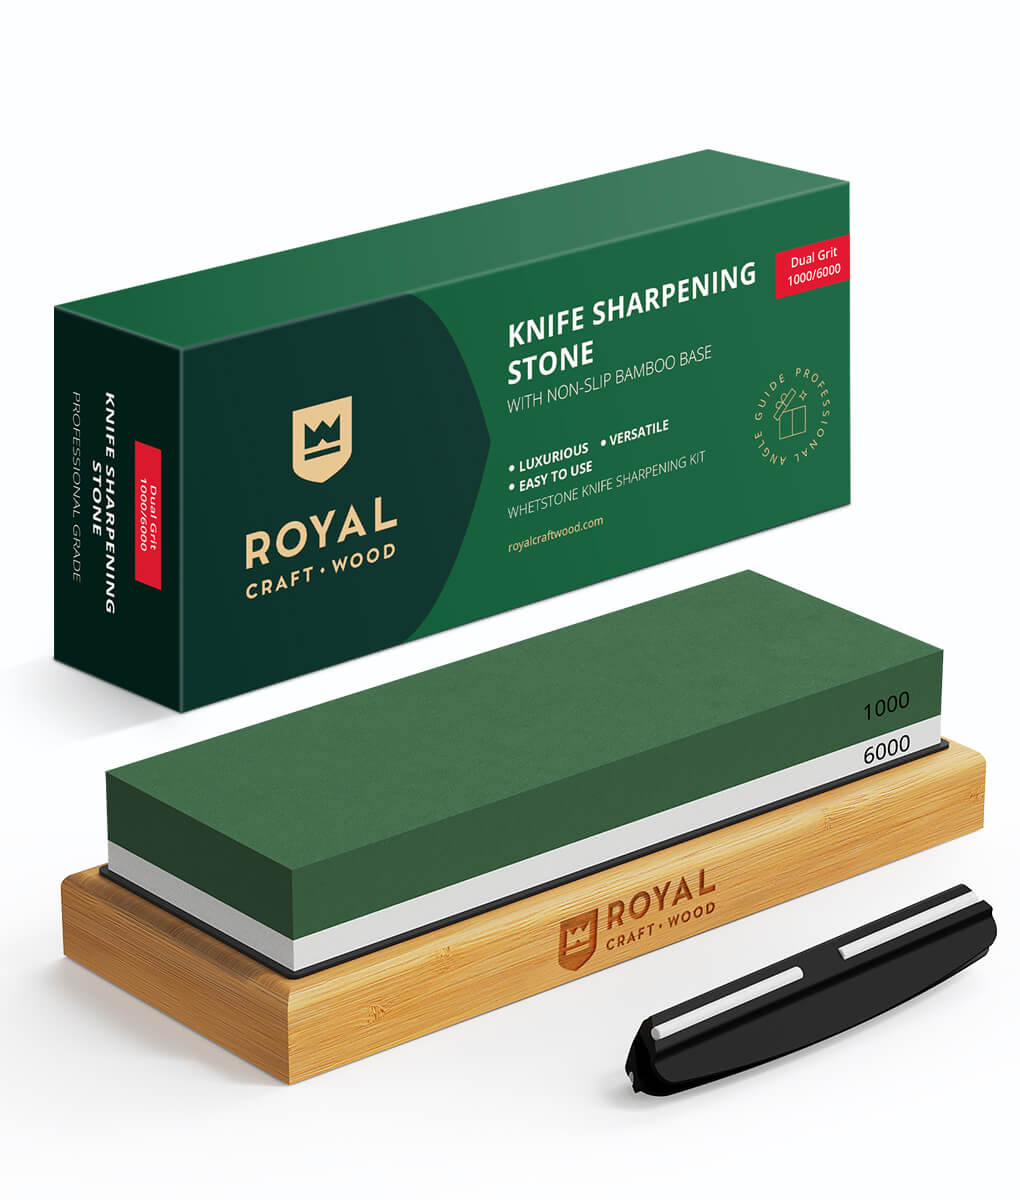 Knife Sharpening Kit by Royal Craft Wood